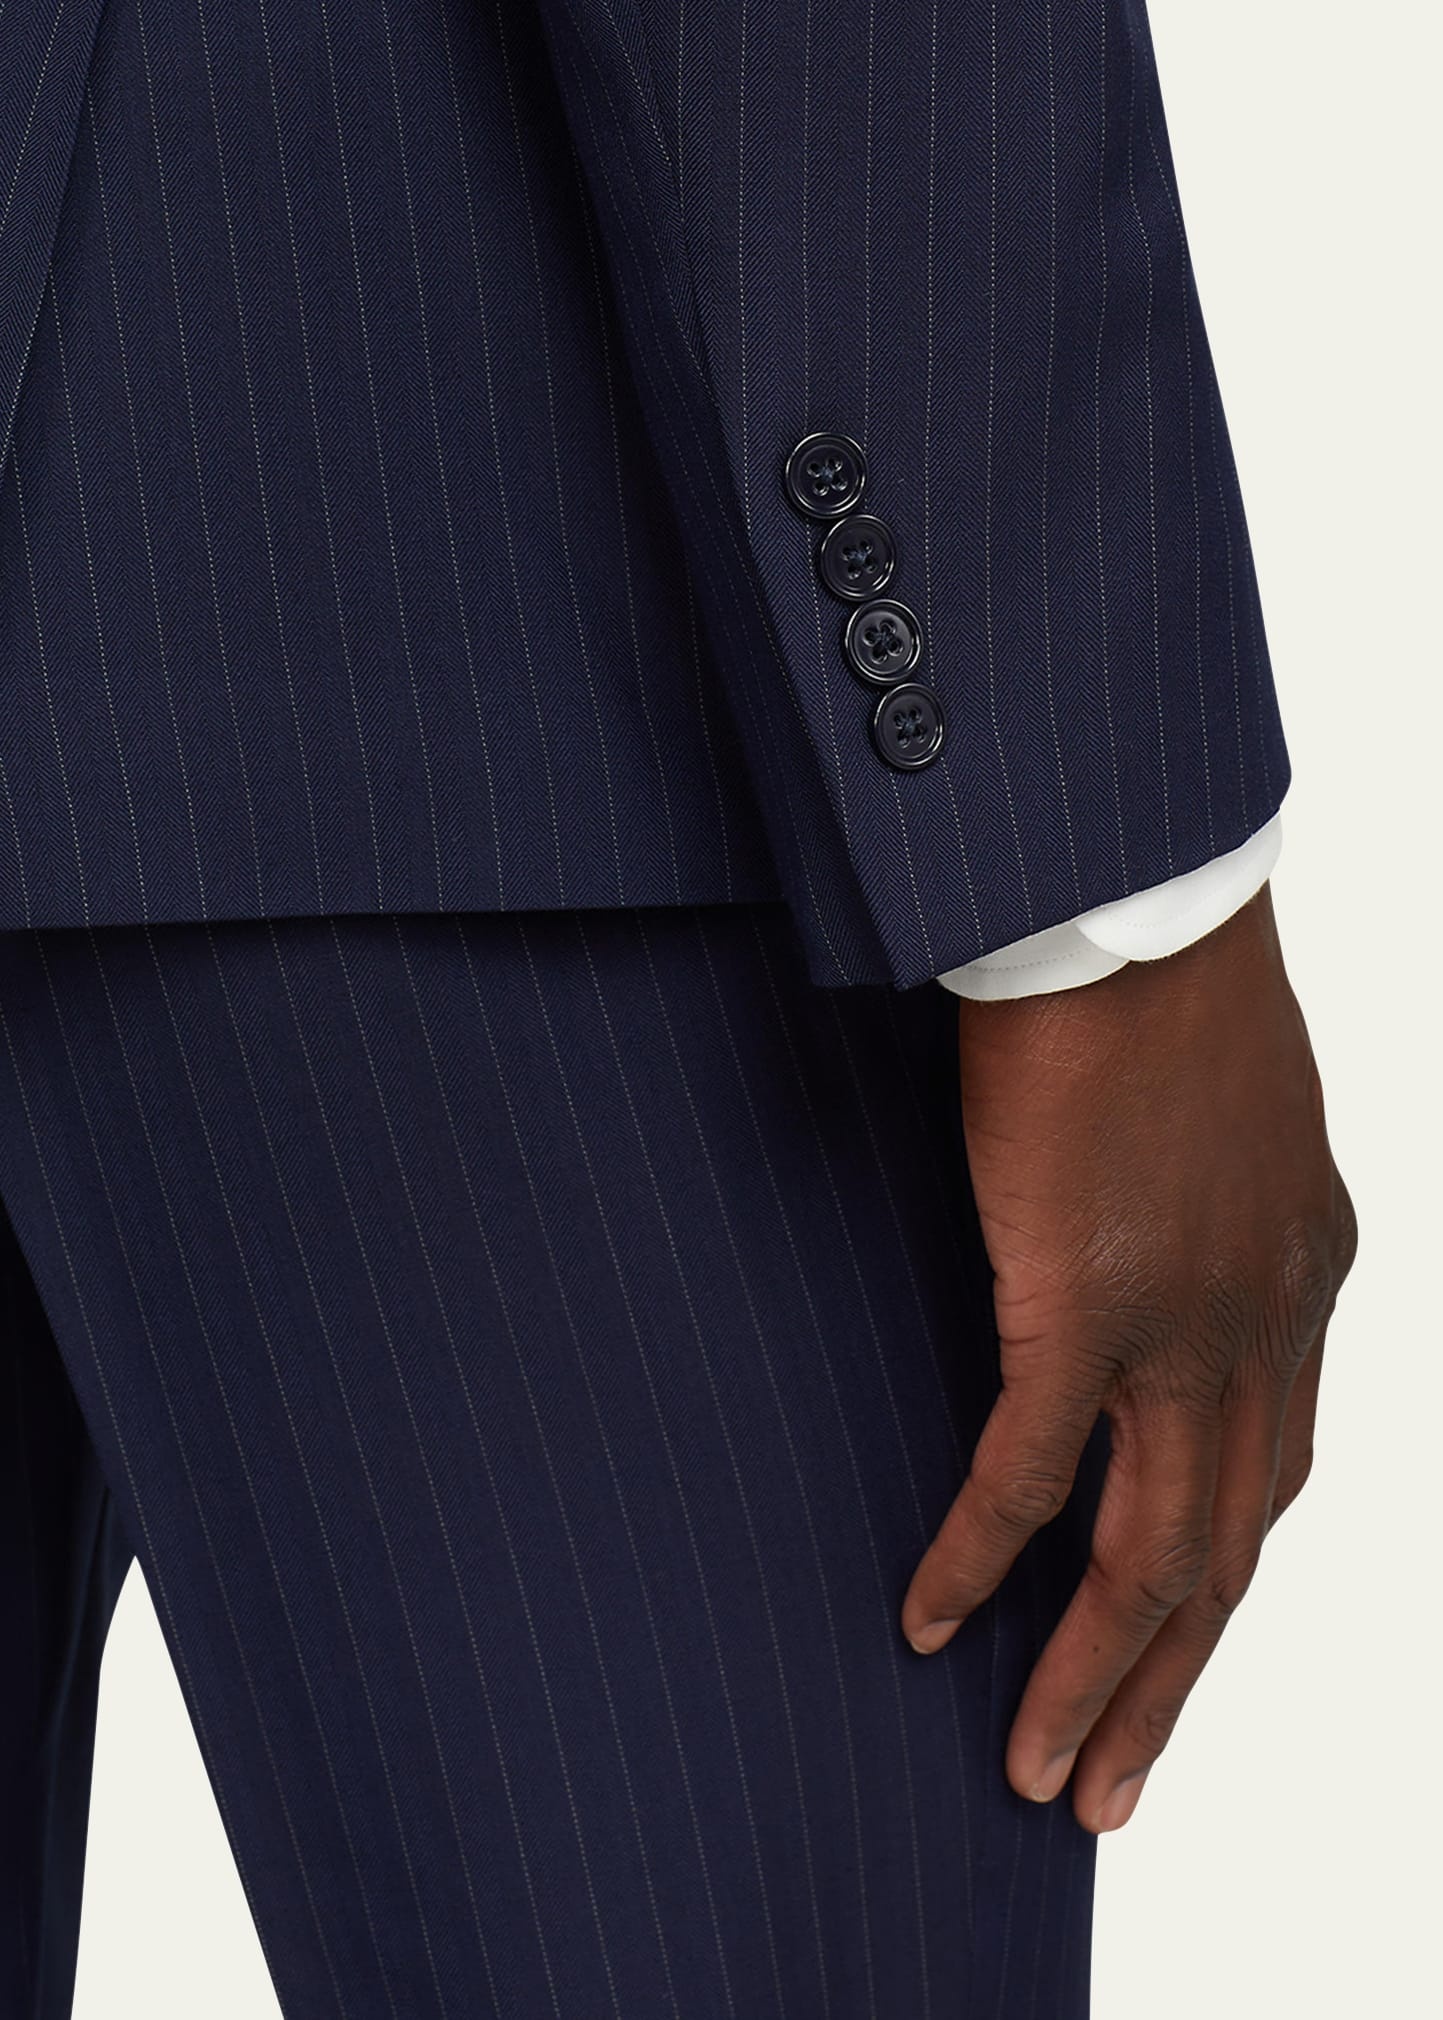 Men's Kent Hand-Tailored Pinstripe Suit - 5